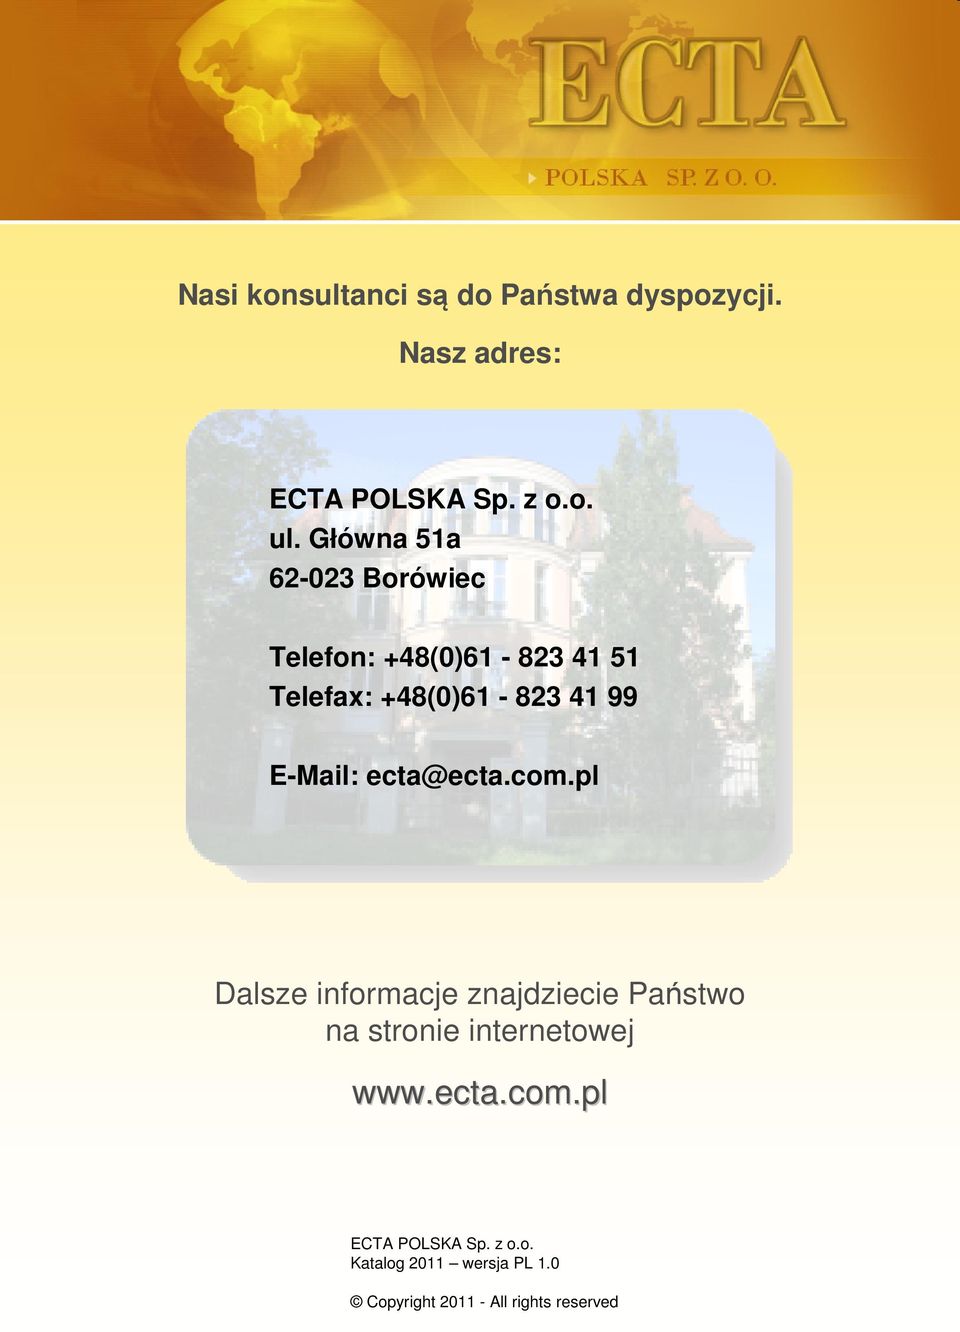 E-Mail: ecta@ecta.com.